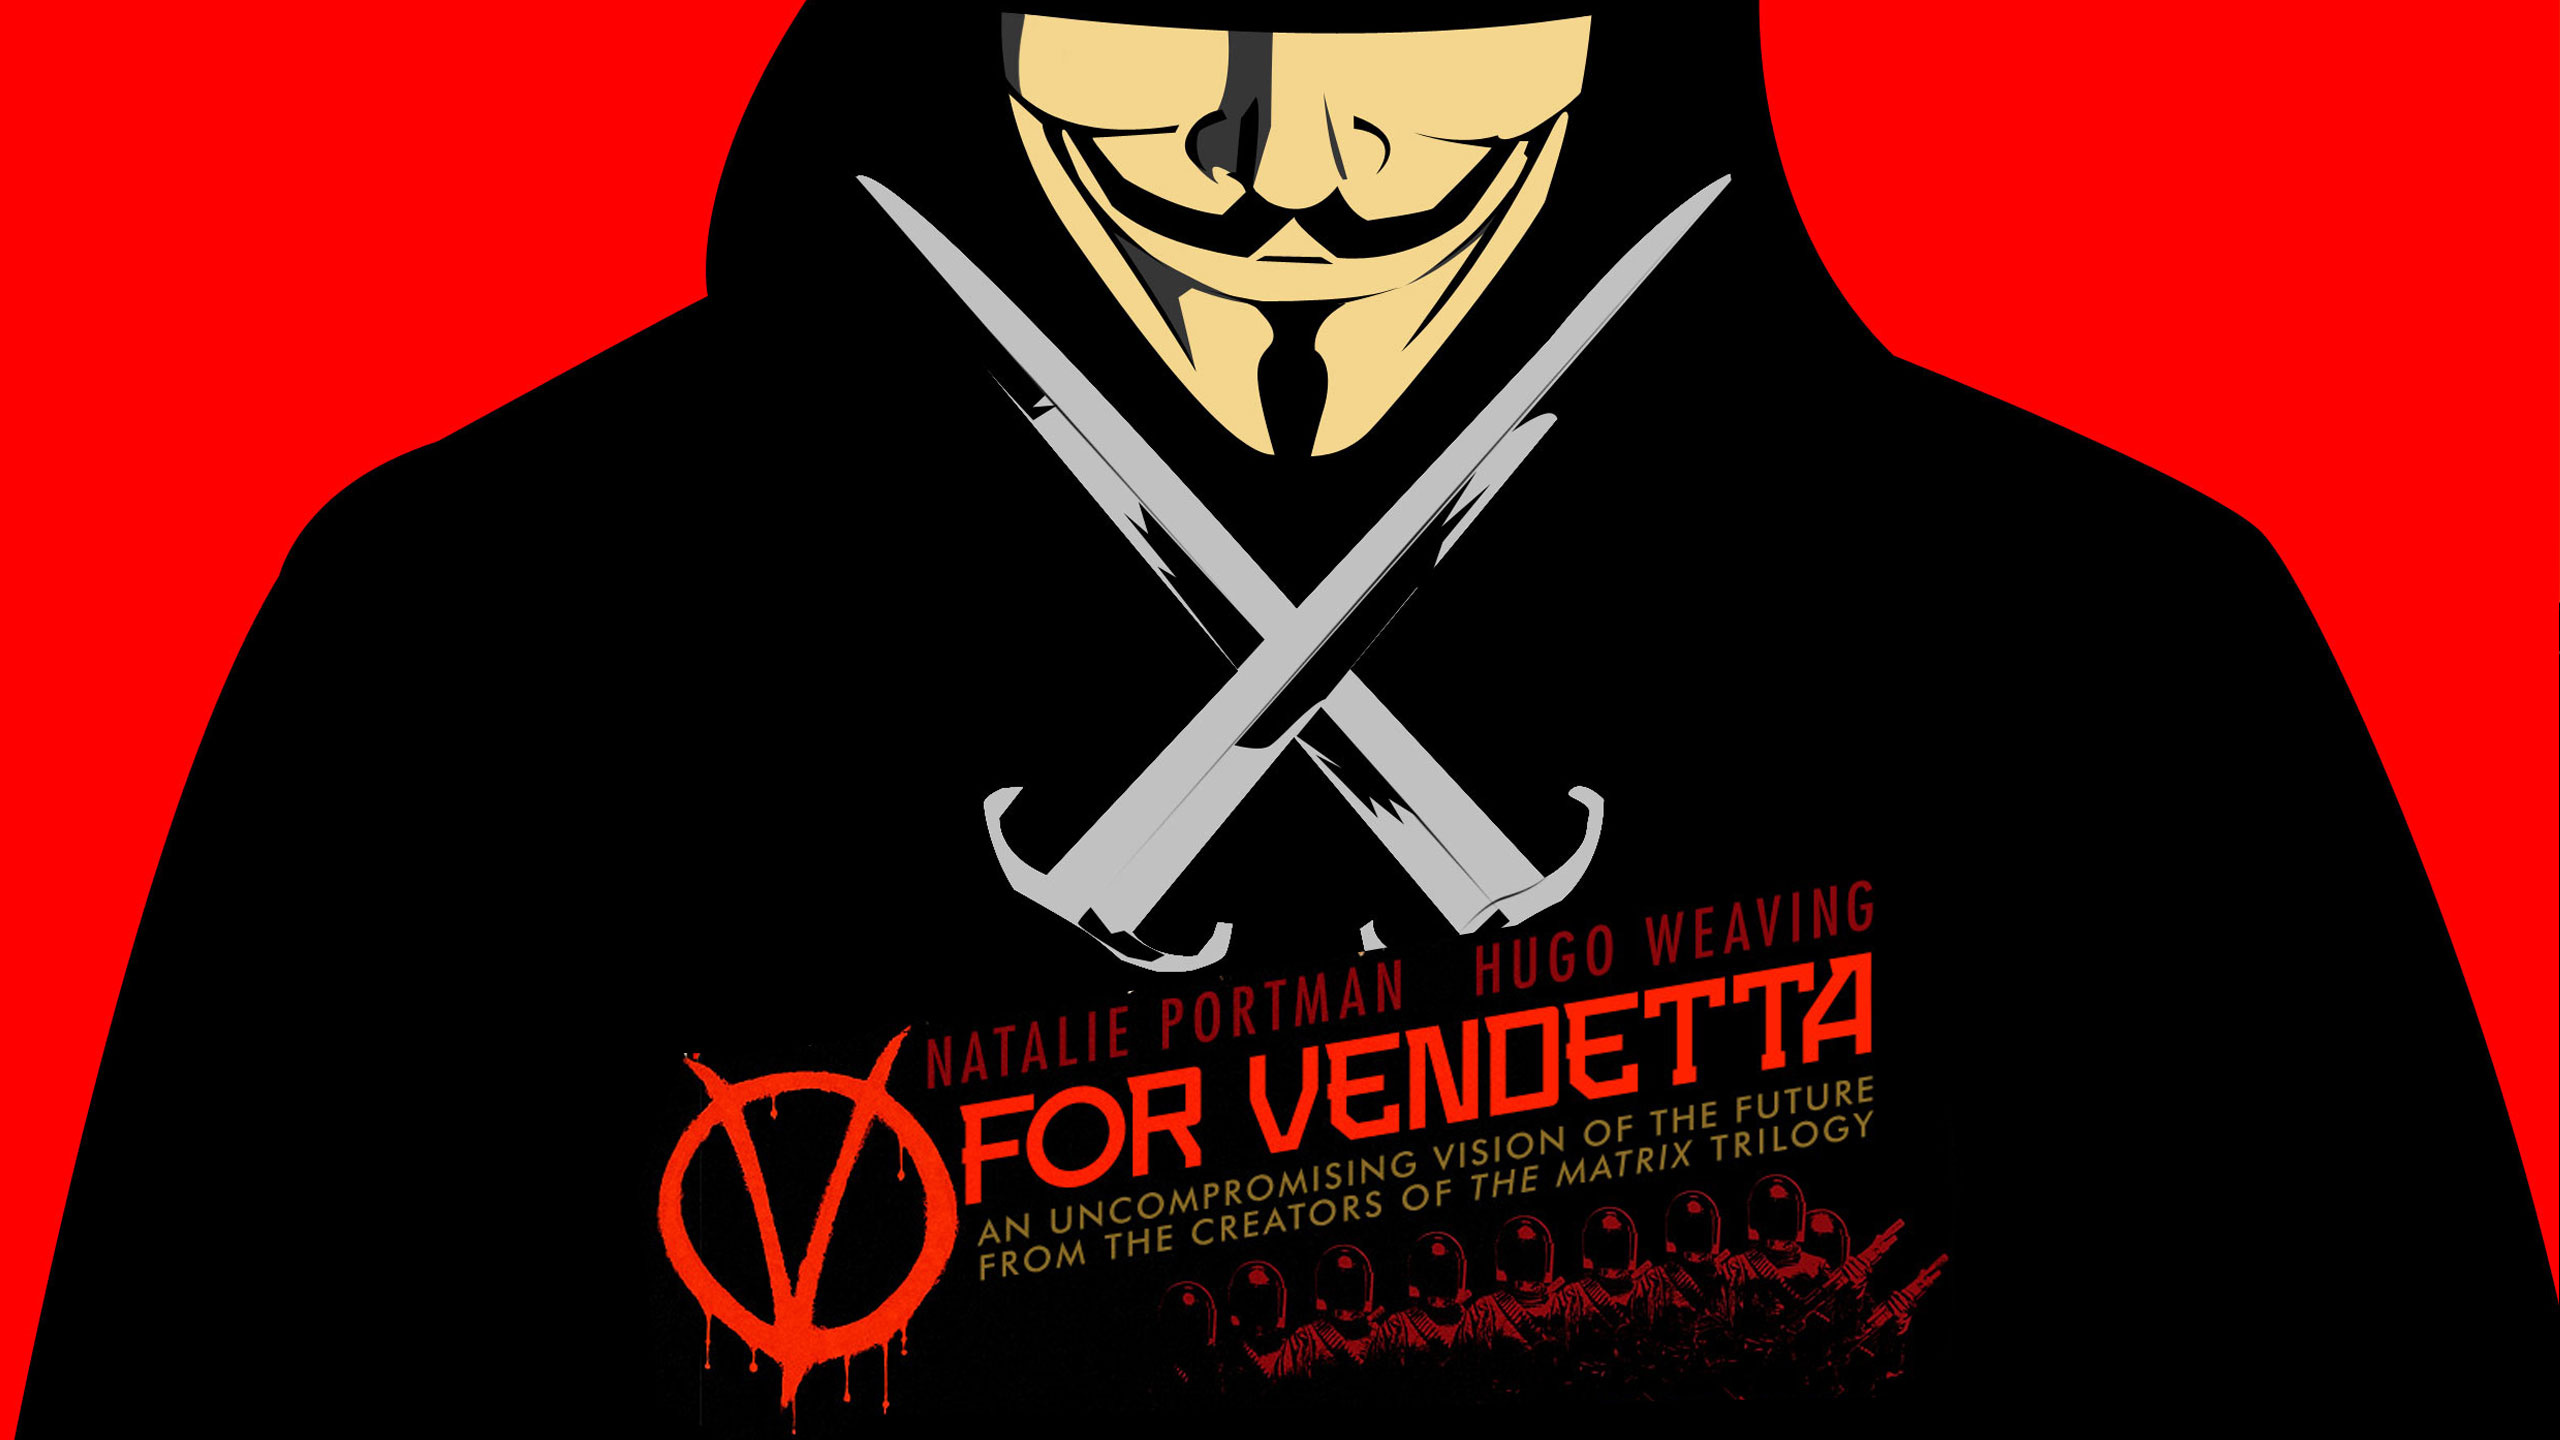 V for Vendetta: Hugo Weaving, A masked, charismatic and skilled anarchist terrorist. 2560x1440 HD Background.